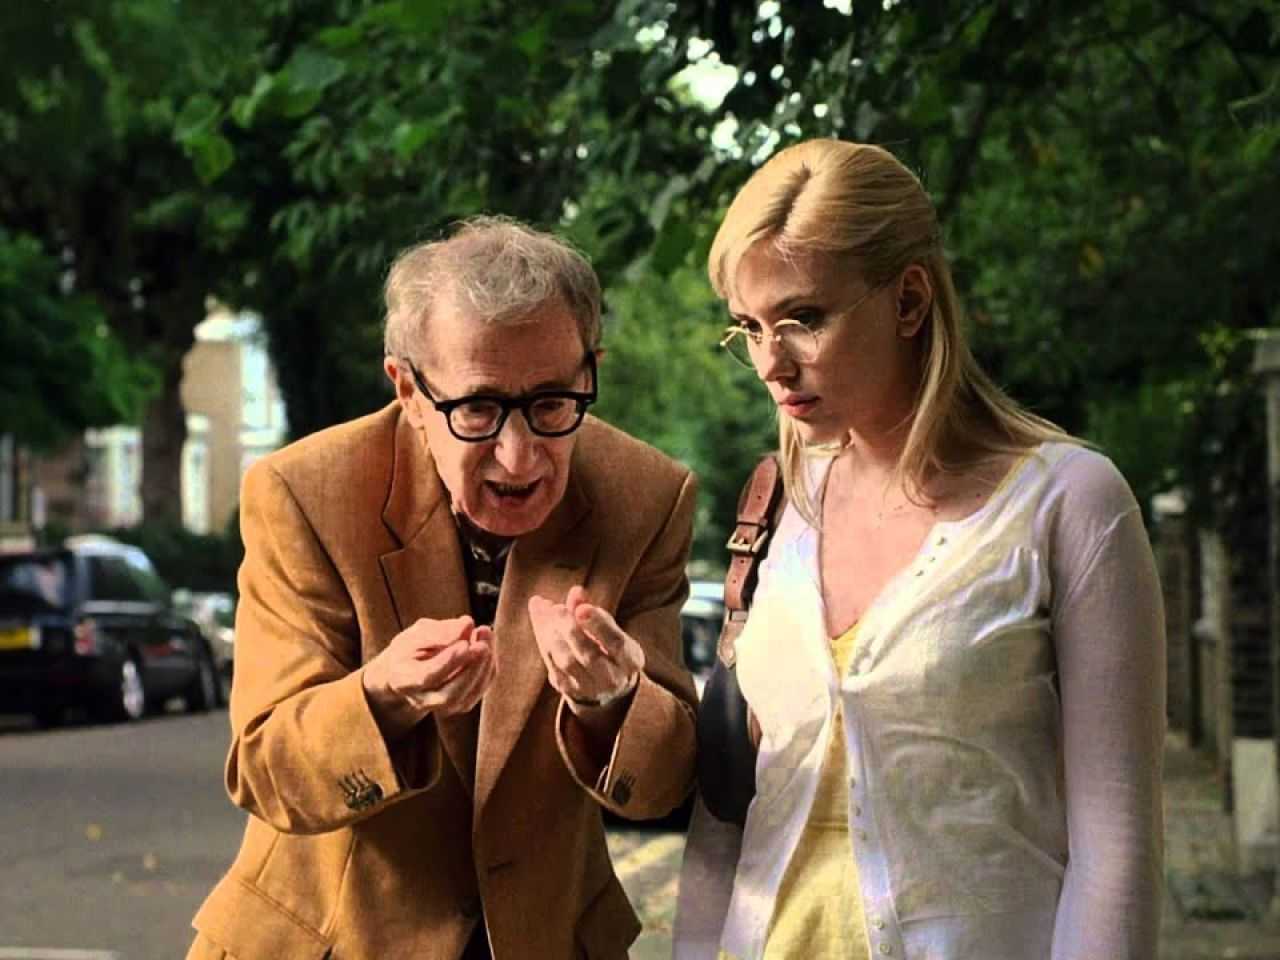 I migliori film di Woody Allen, 5 pellicole per capirlo (Parte II)